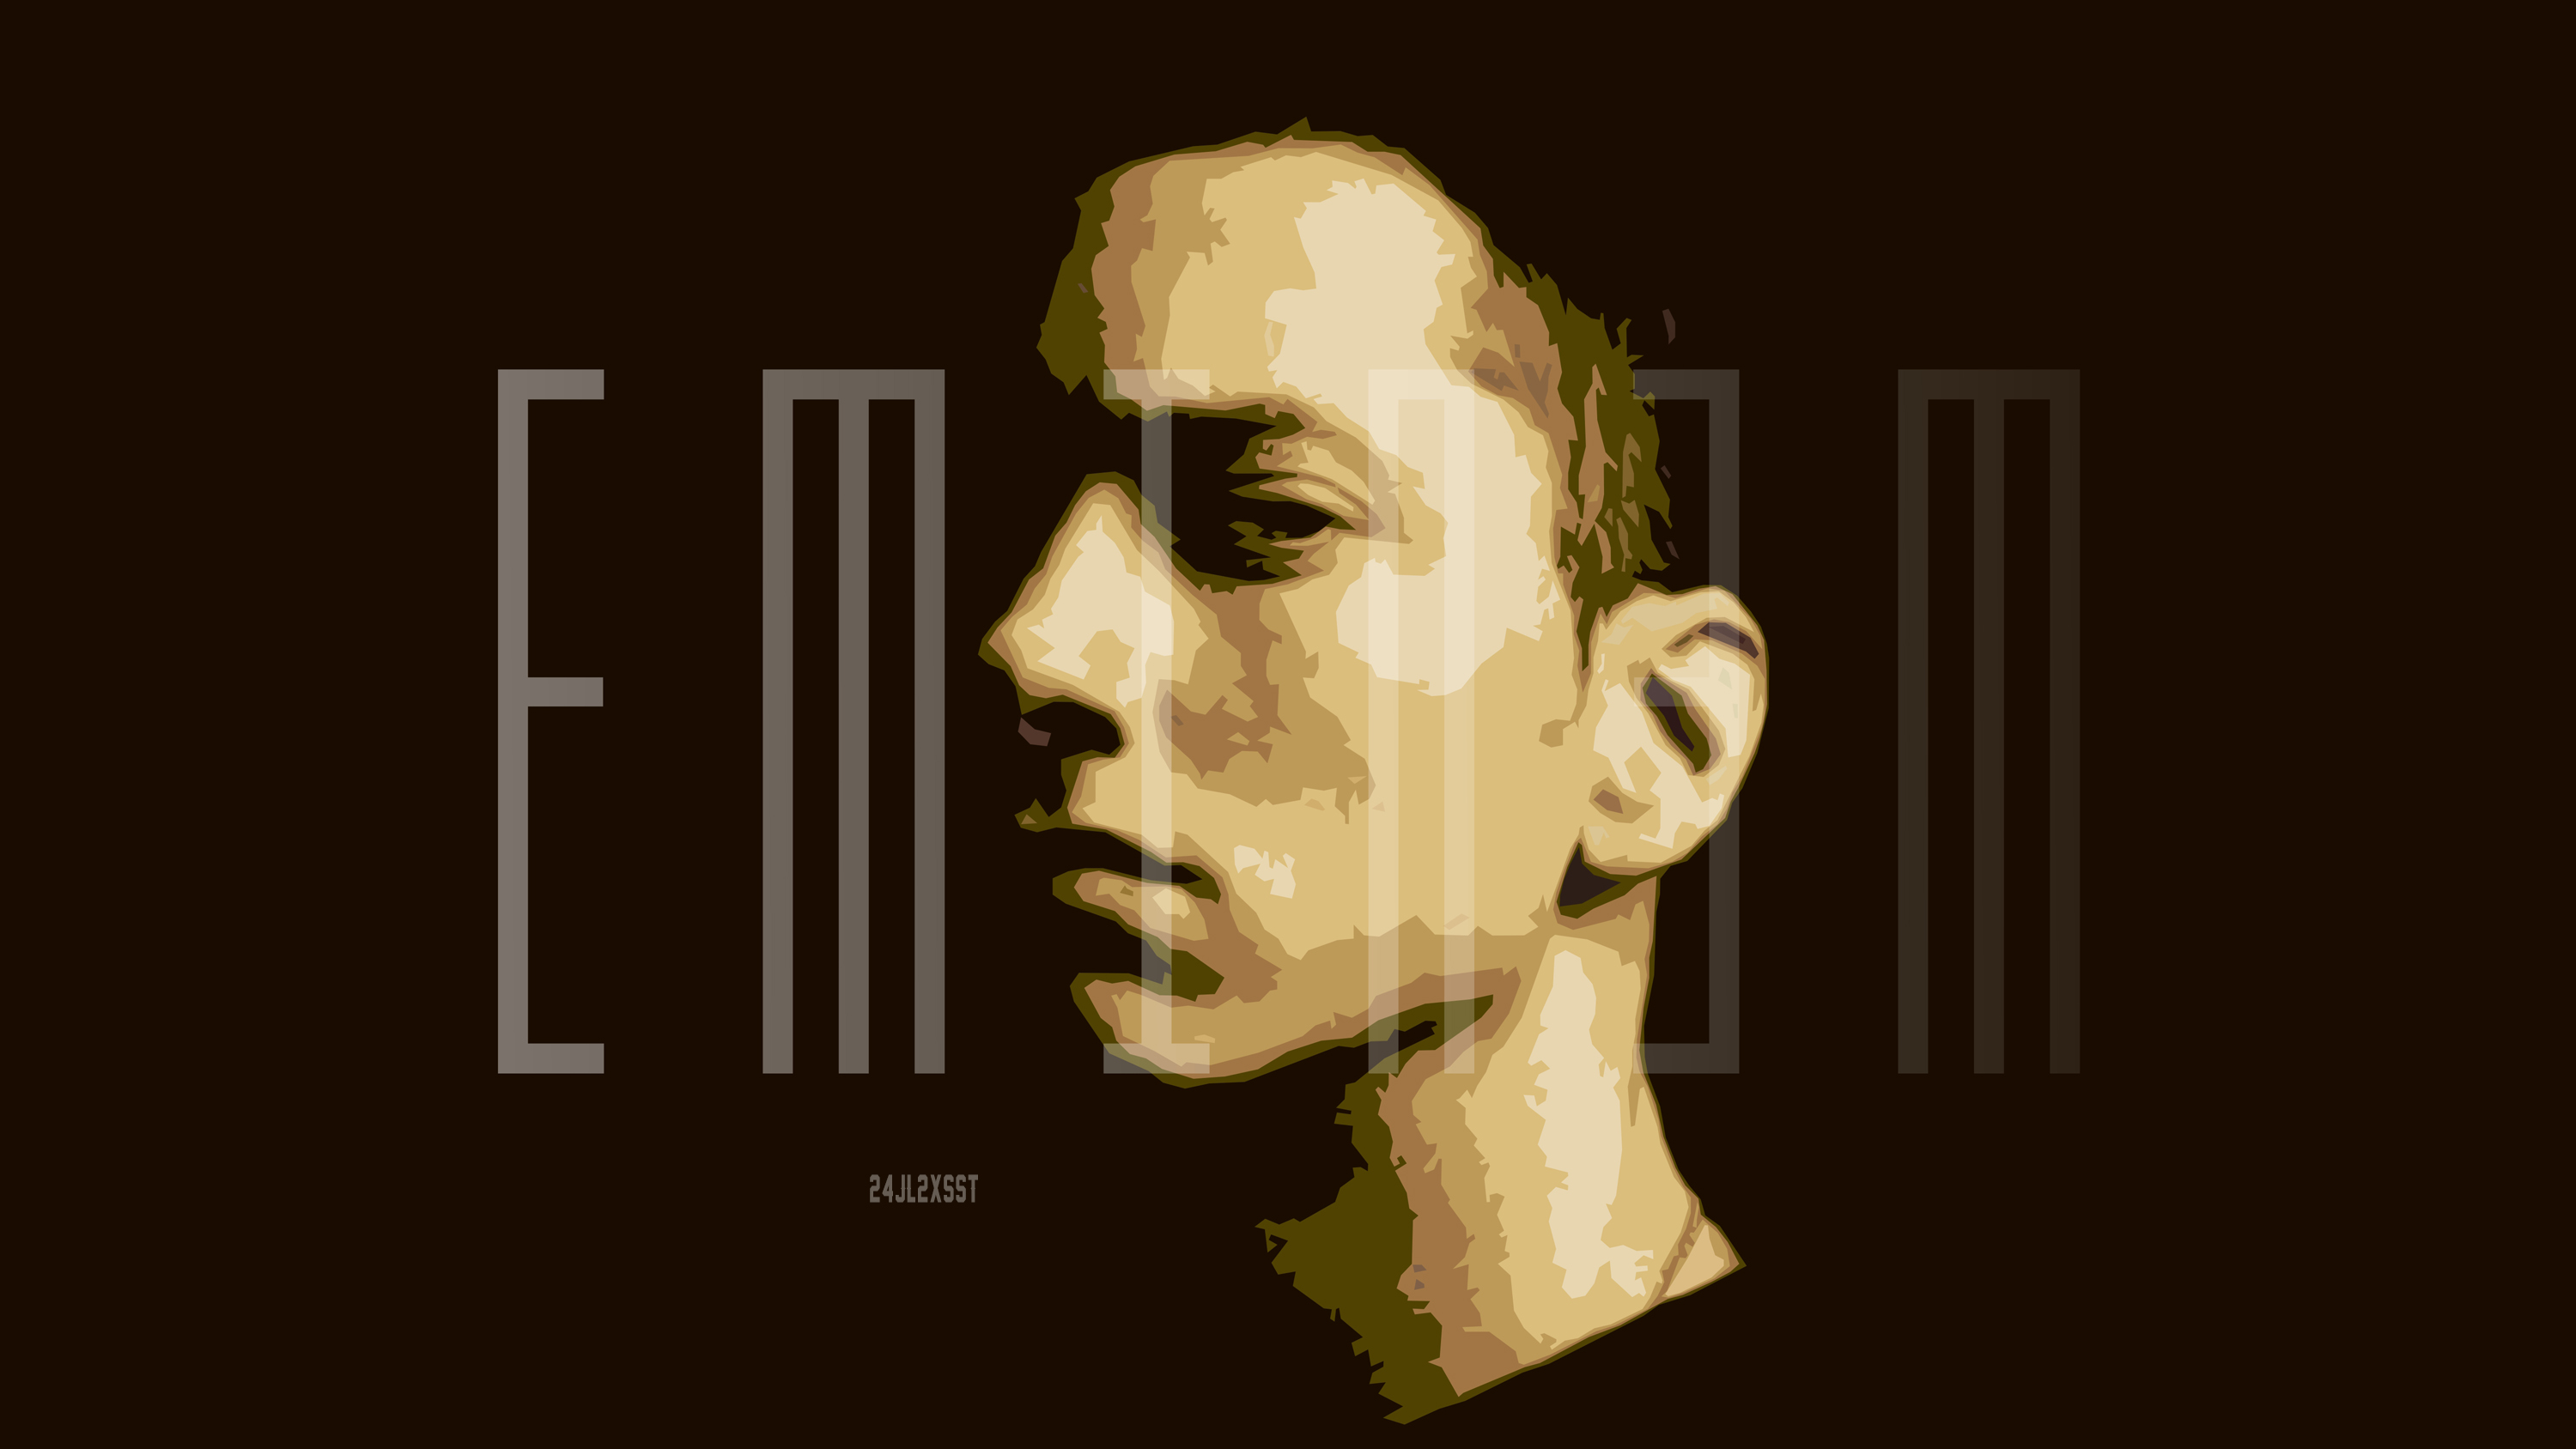 Artistic Digital Art Eminem Face Portrait Rapper Singer 3000x1688